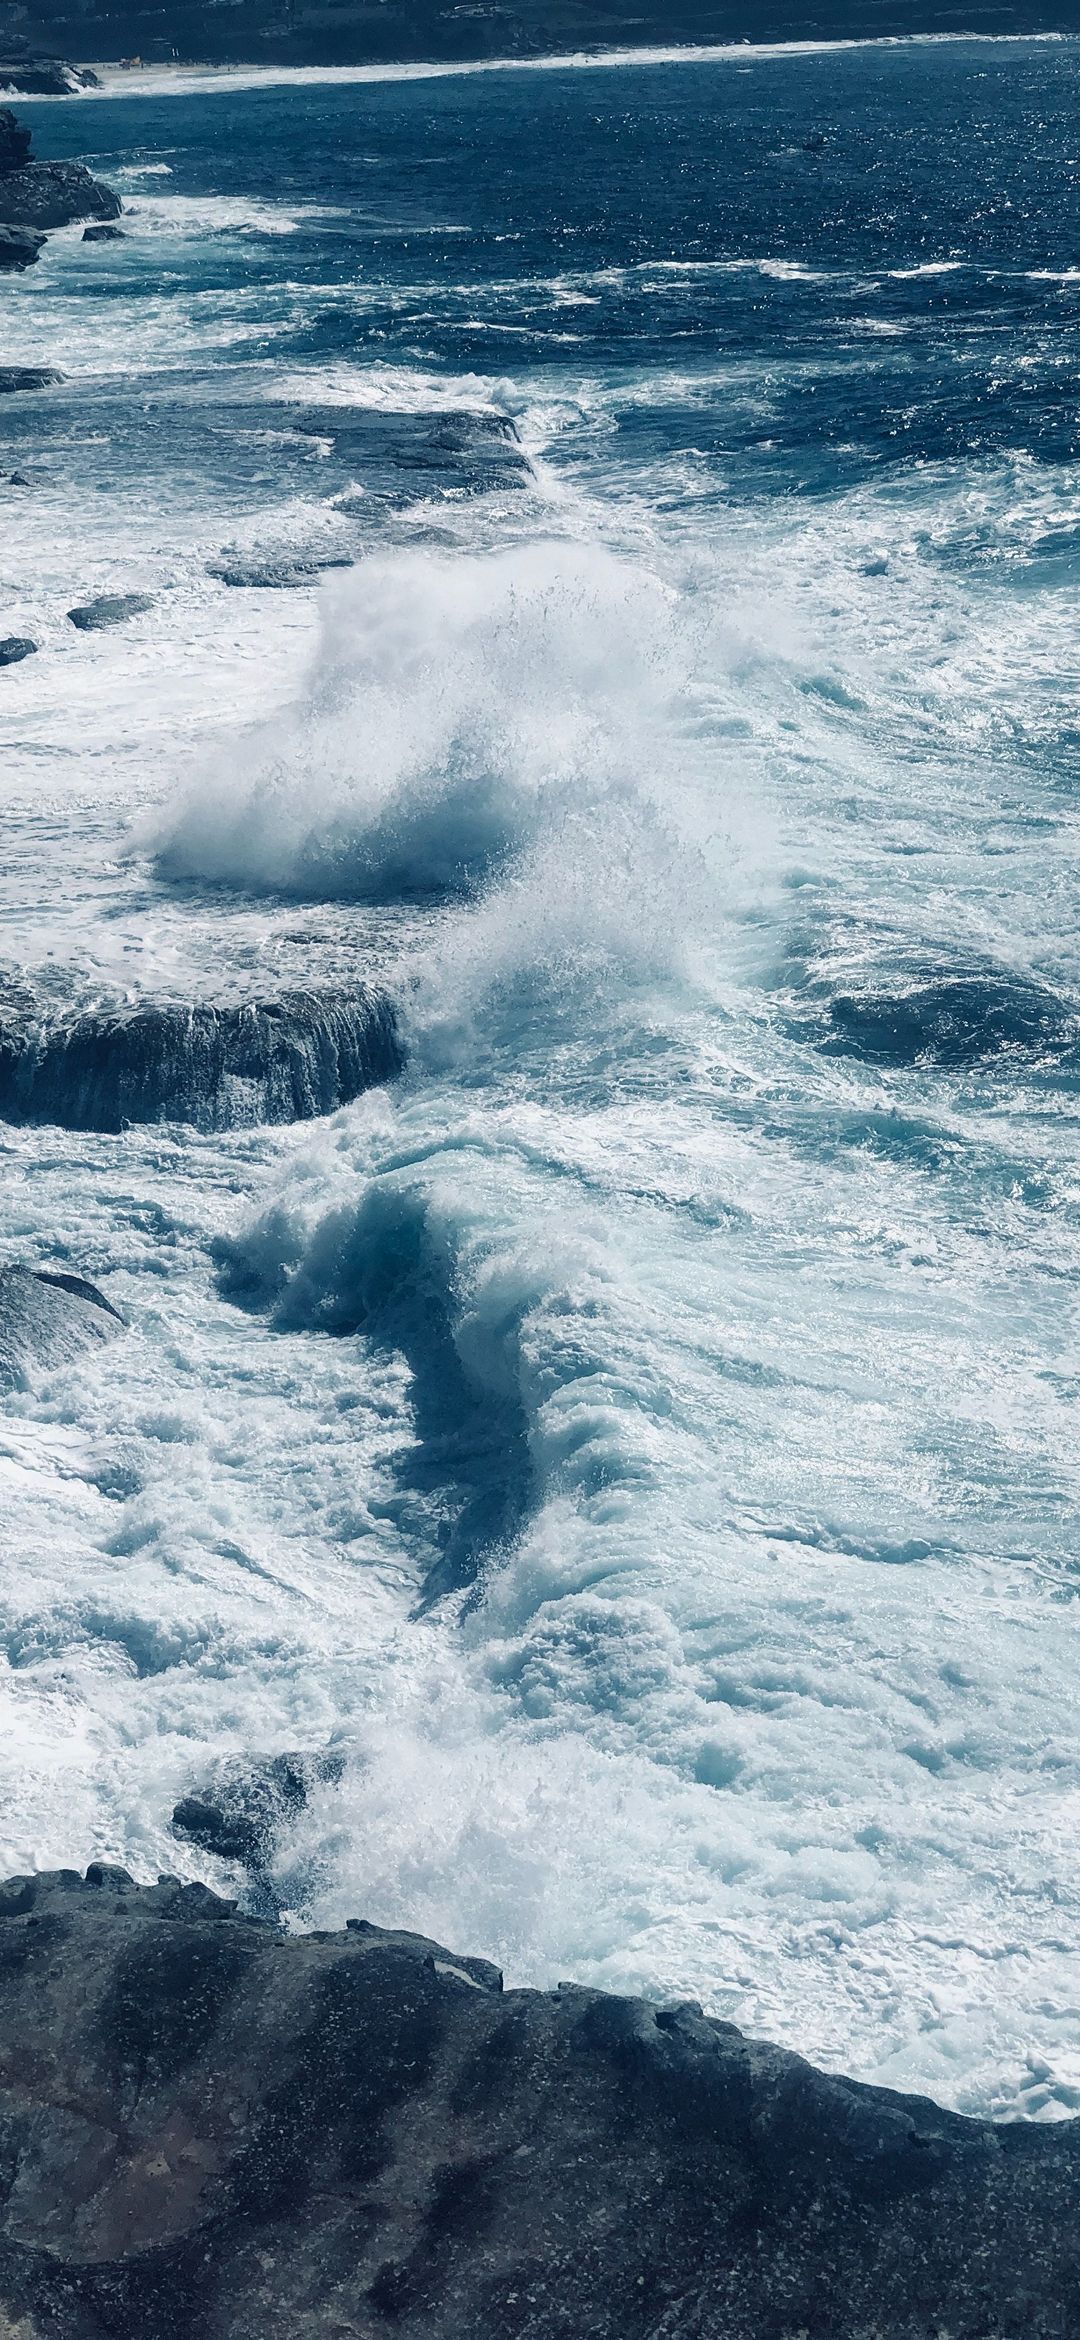 IPhone wallpaper waves crashing against the rocks - Water